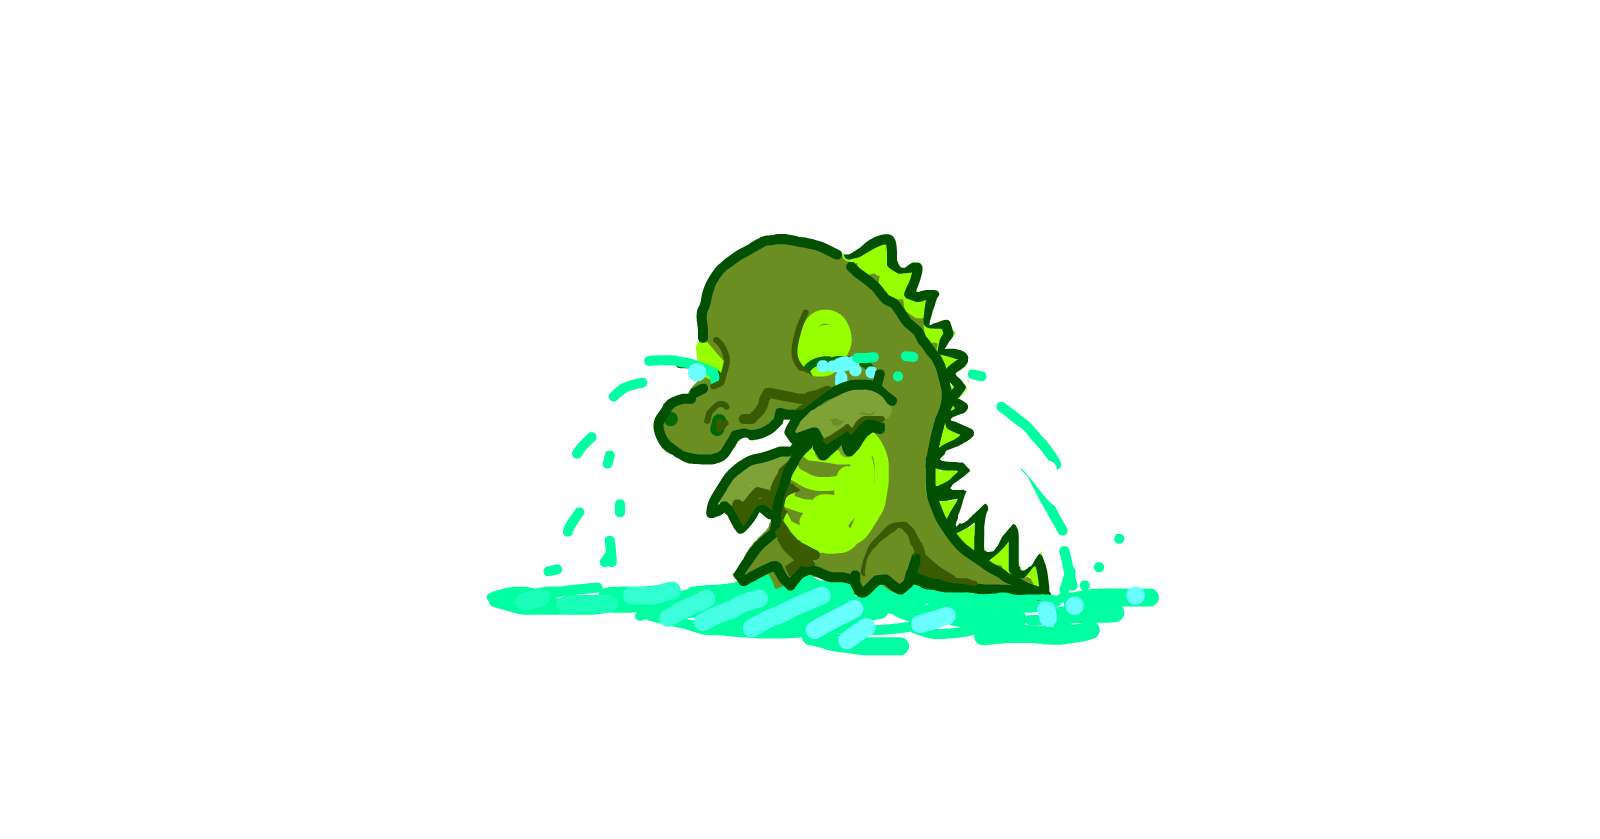 Krokodyle łzy [2] puzzle online